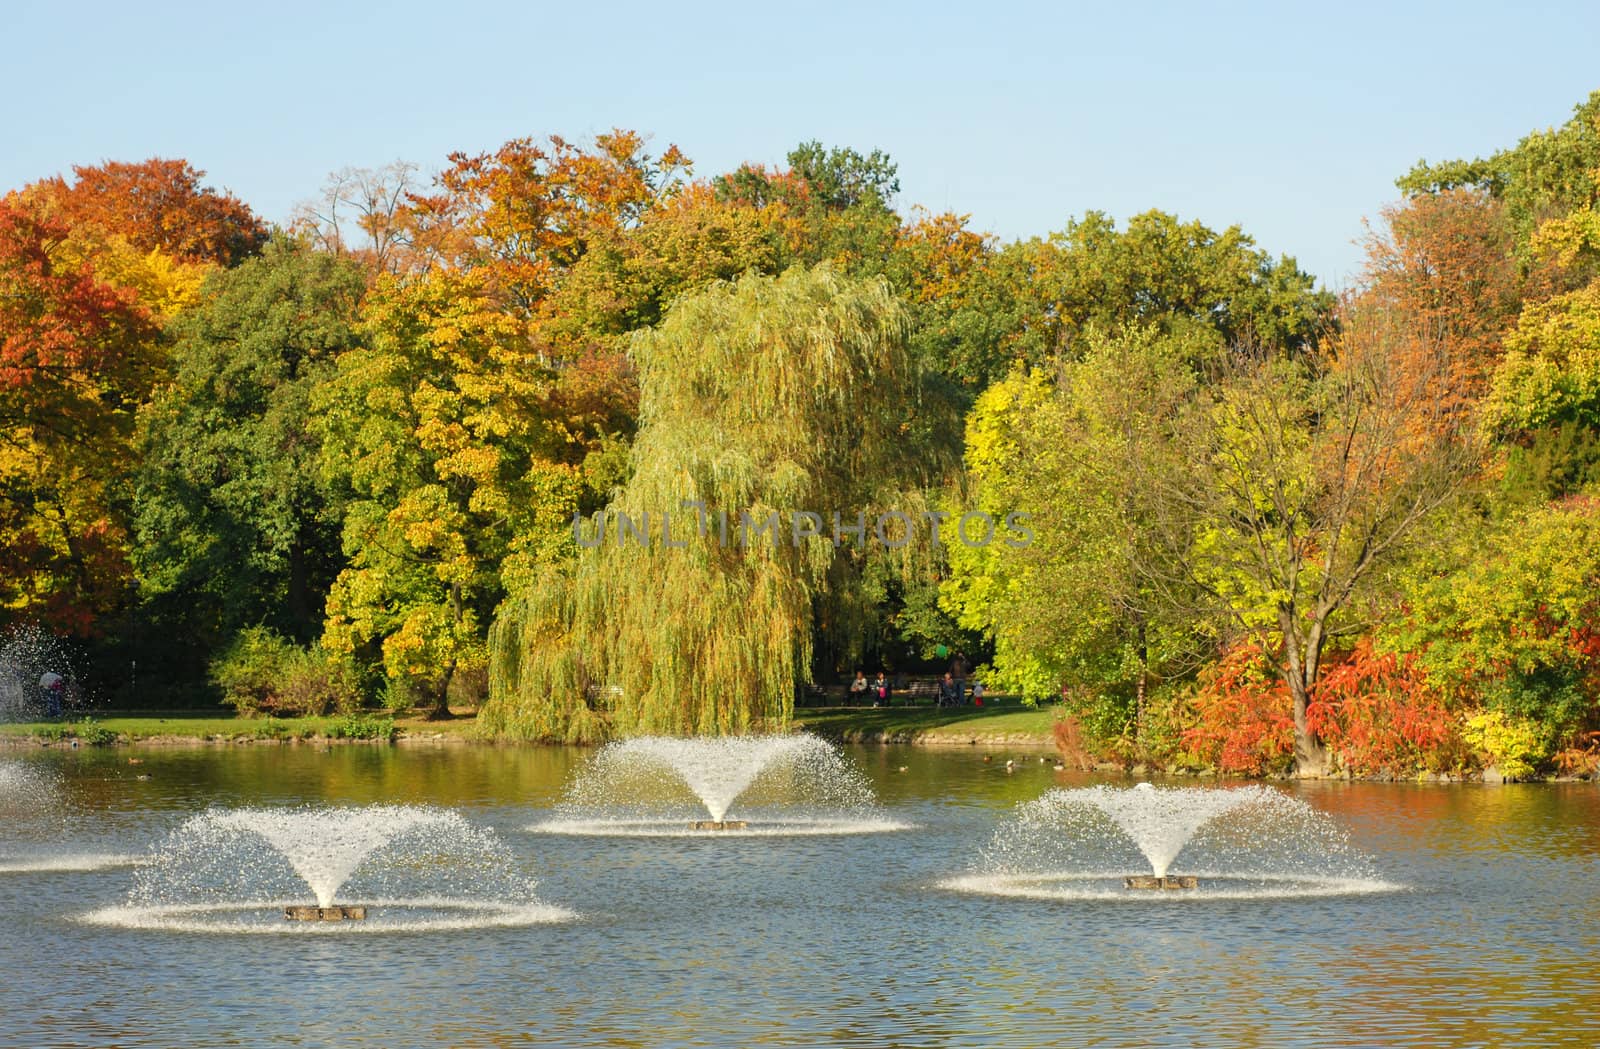 Fountains autumn season. Wroclaw, Park South. Poland. by wojciechkozlowski